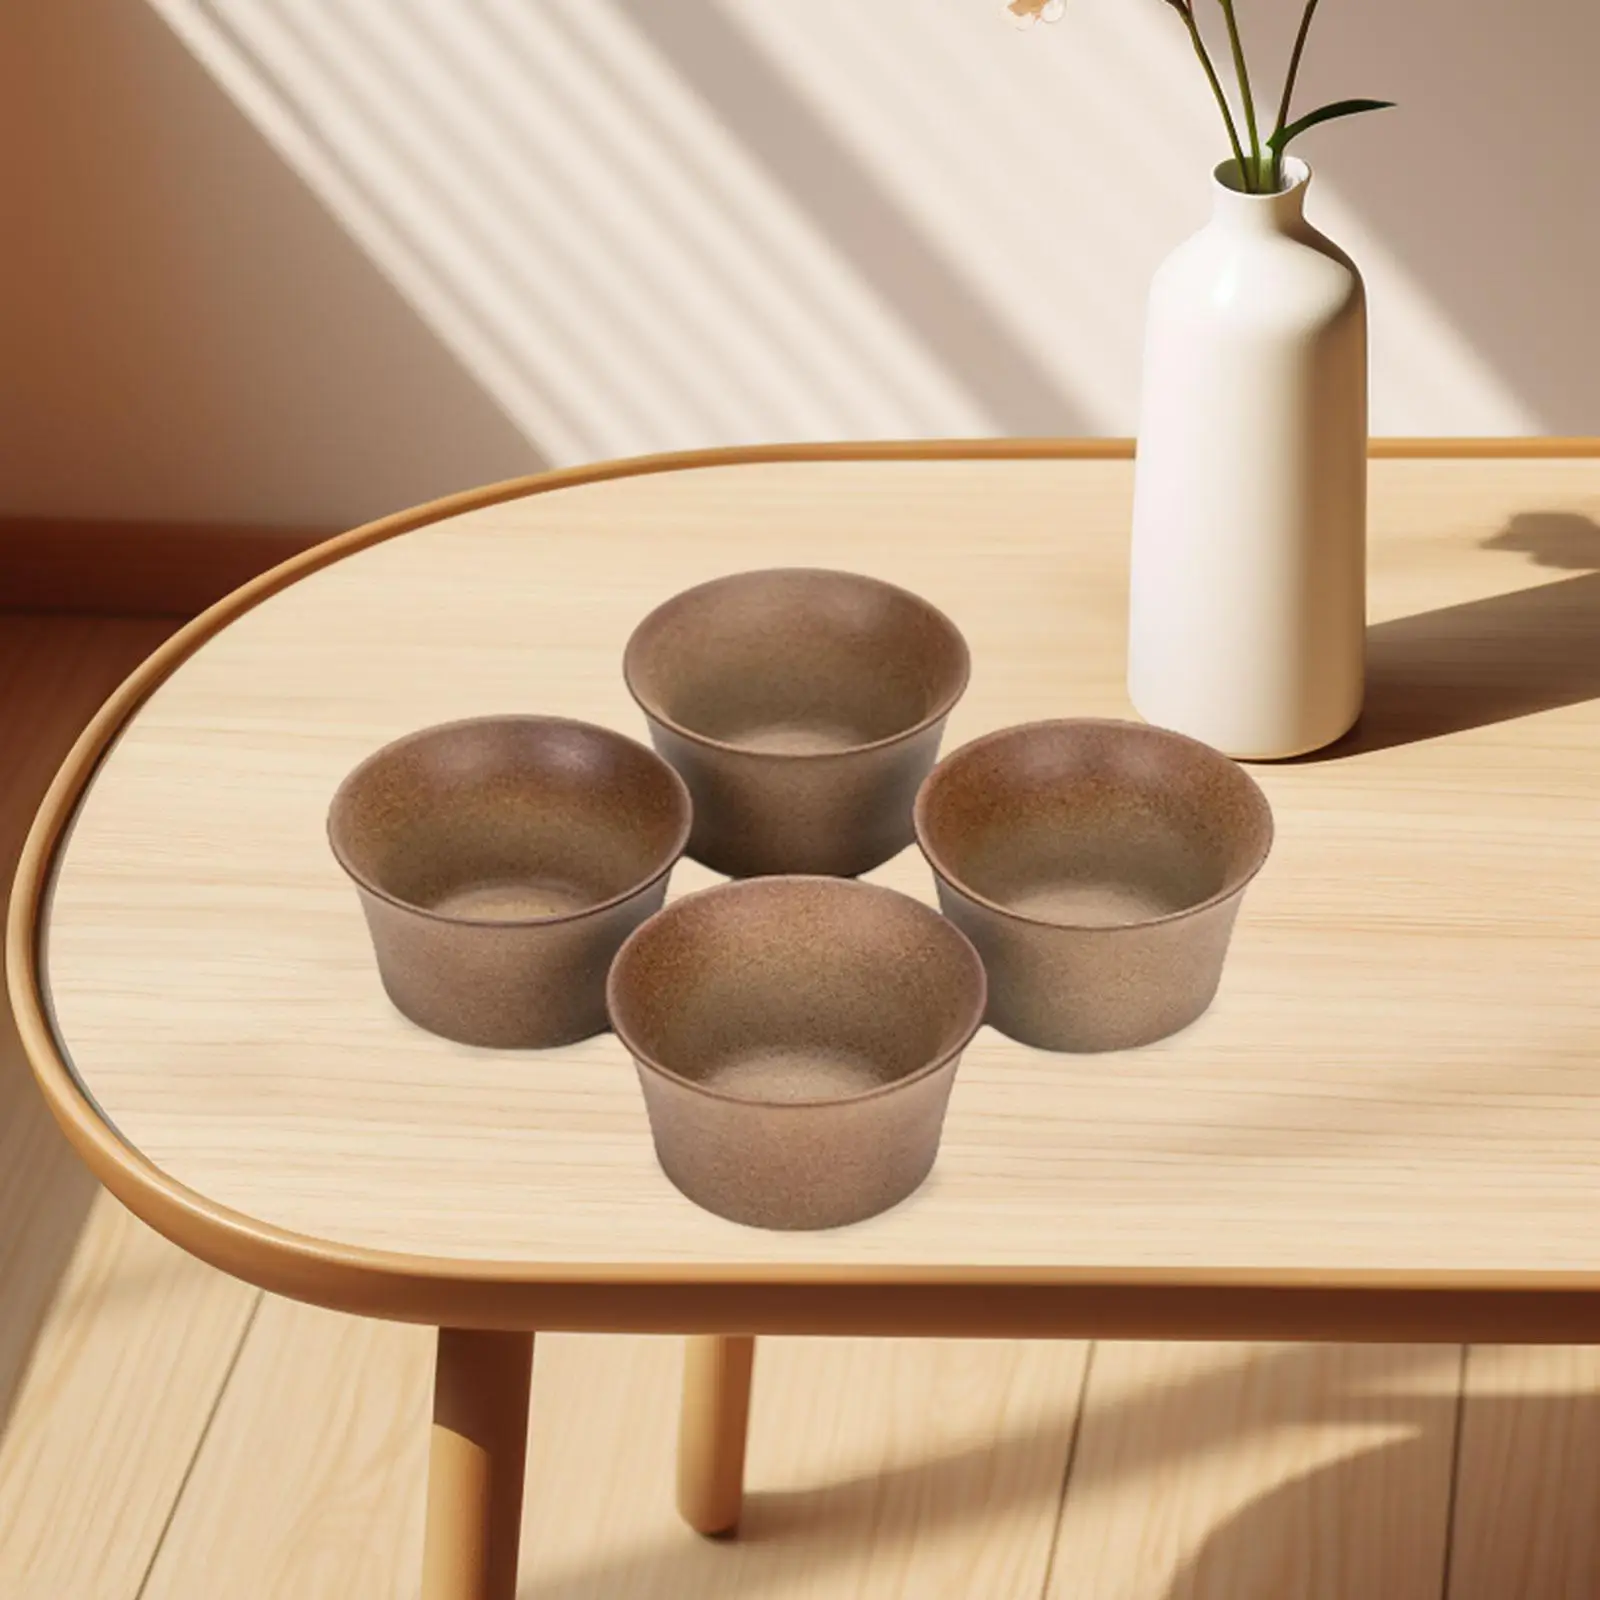 4 Pieces Japanese Tea Cups Set Portable without Handles Coffee Mug Mug for Cappuccino Travel Latte Matcha Tea Tea Ceremony Party